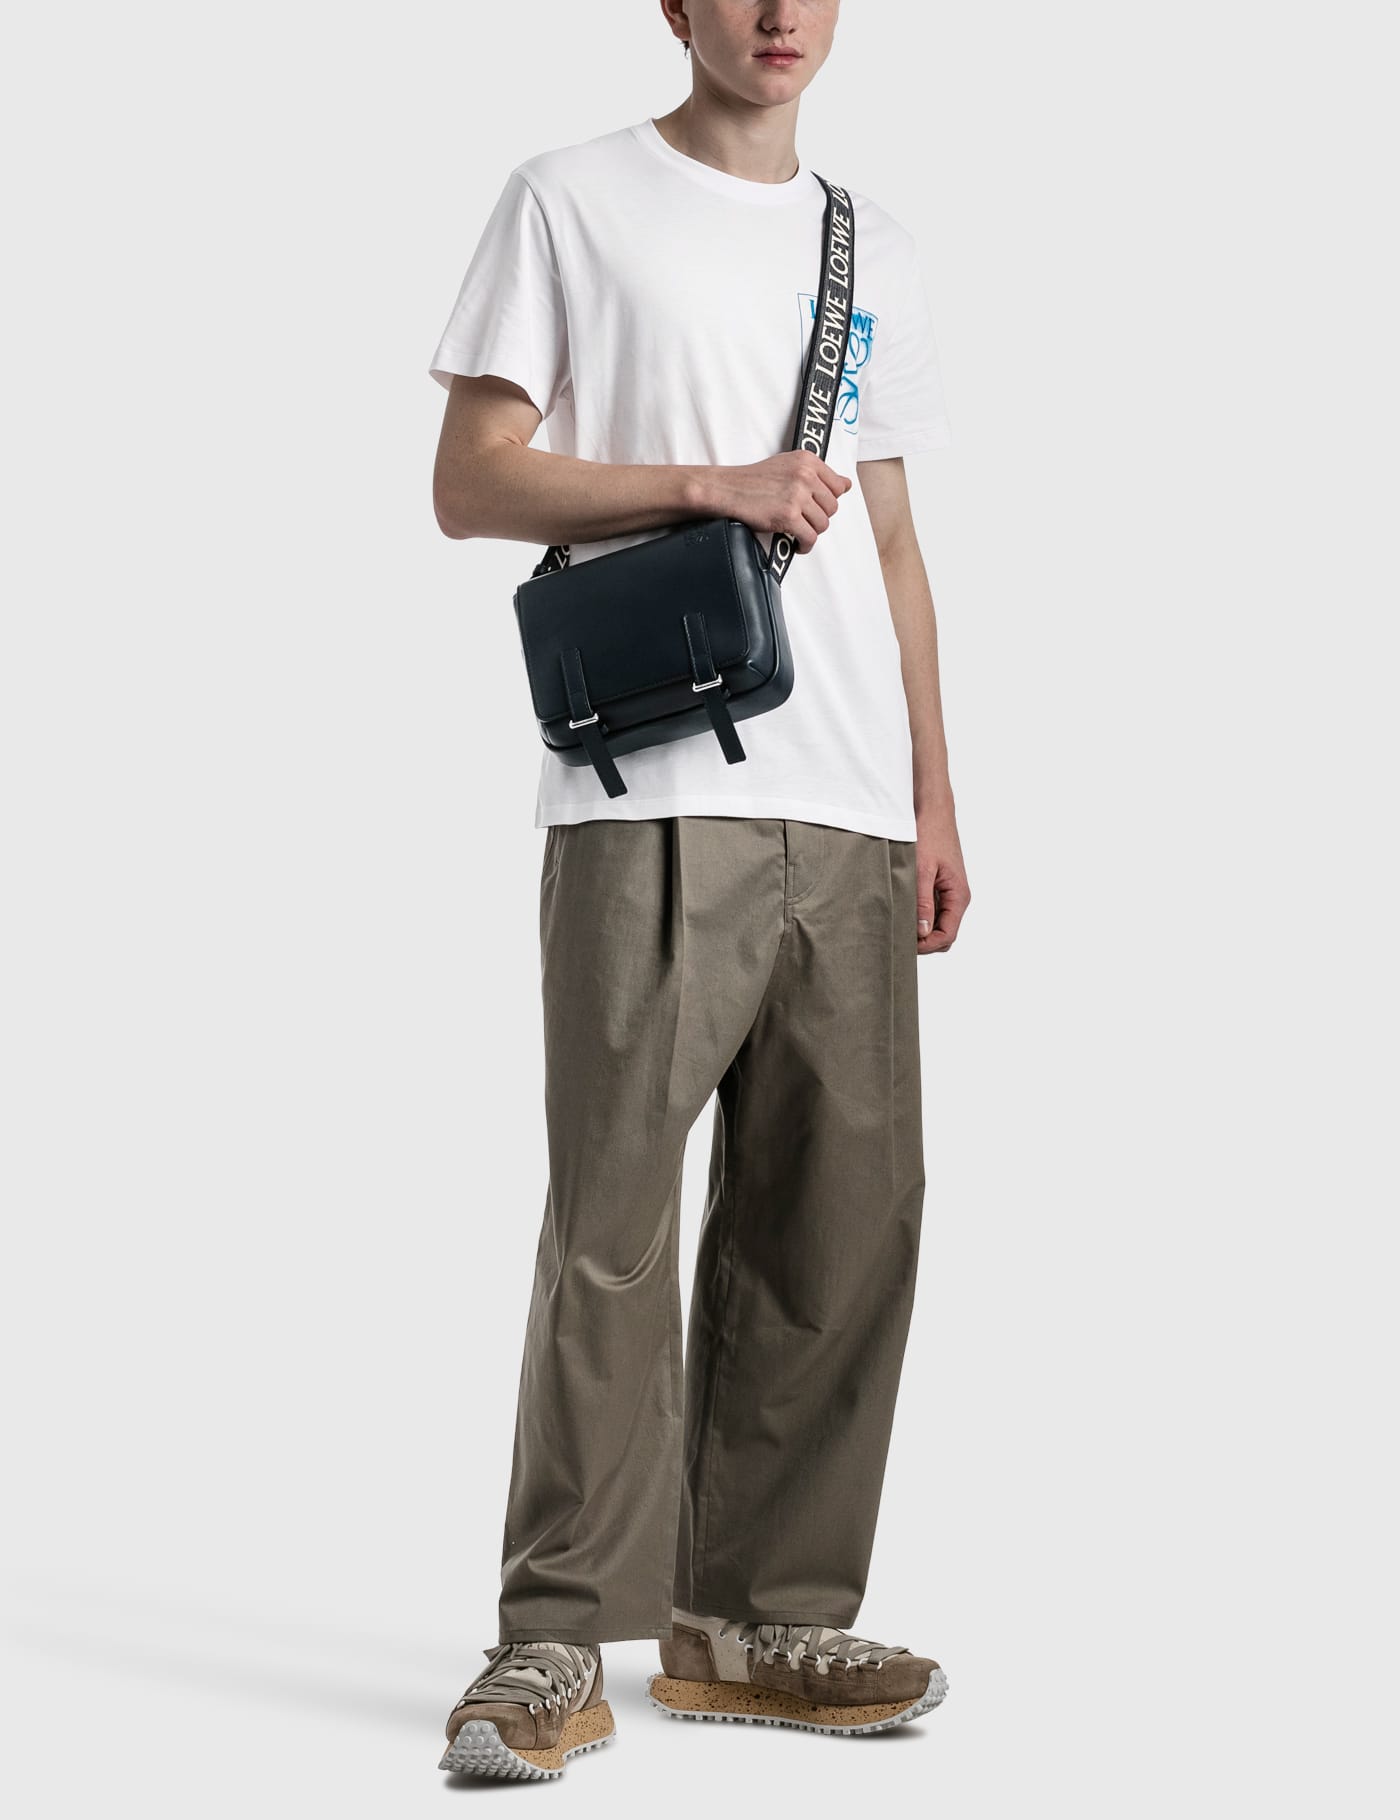 Loewe - XS Military Messenger Bag | HBX - Globally Curated Fashion